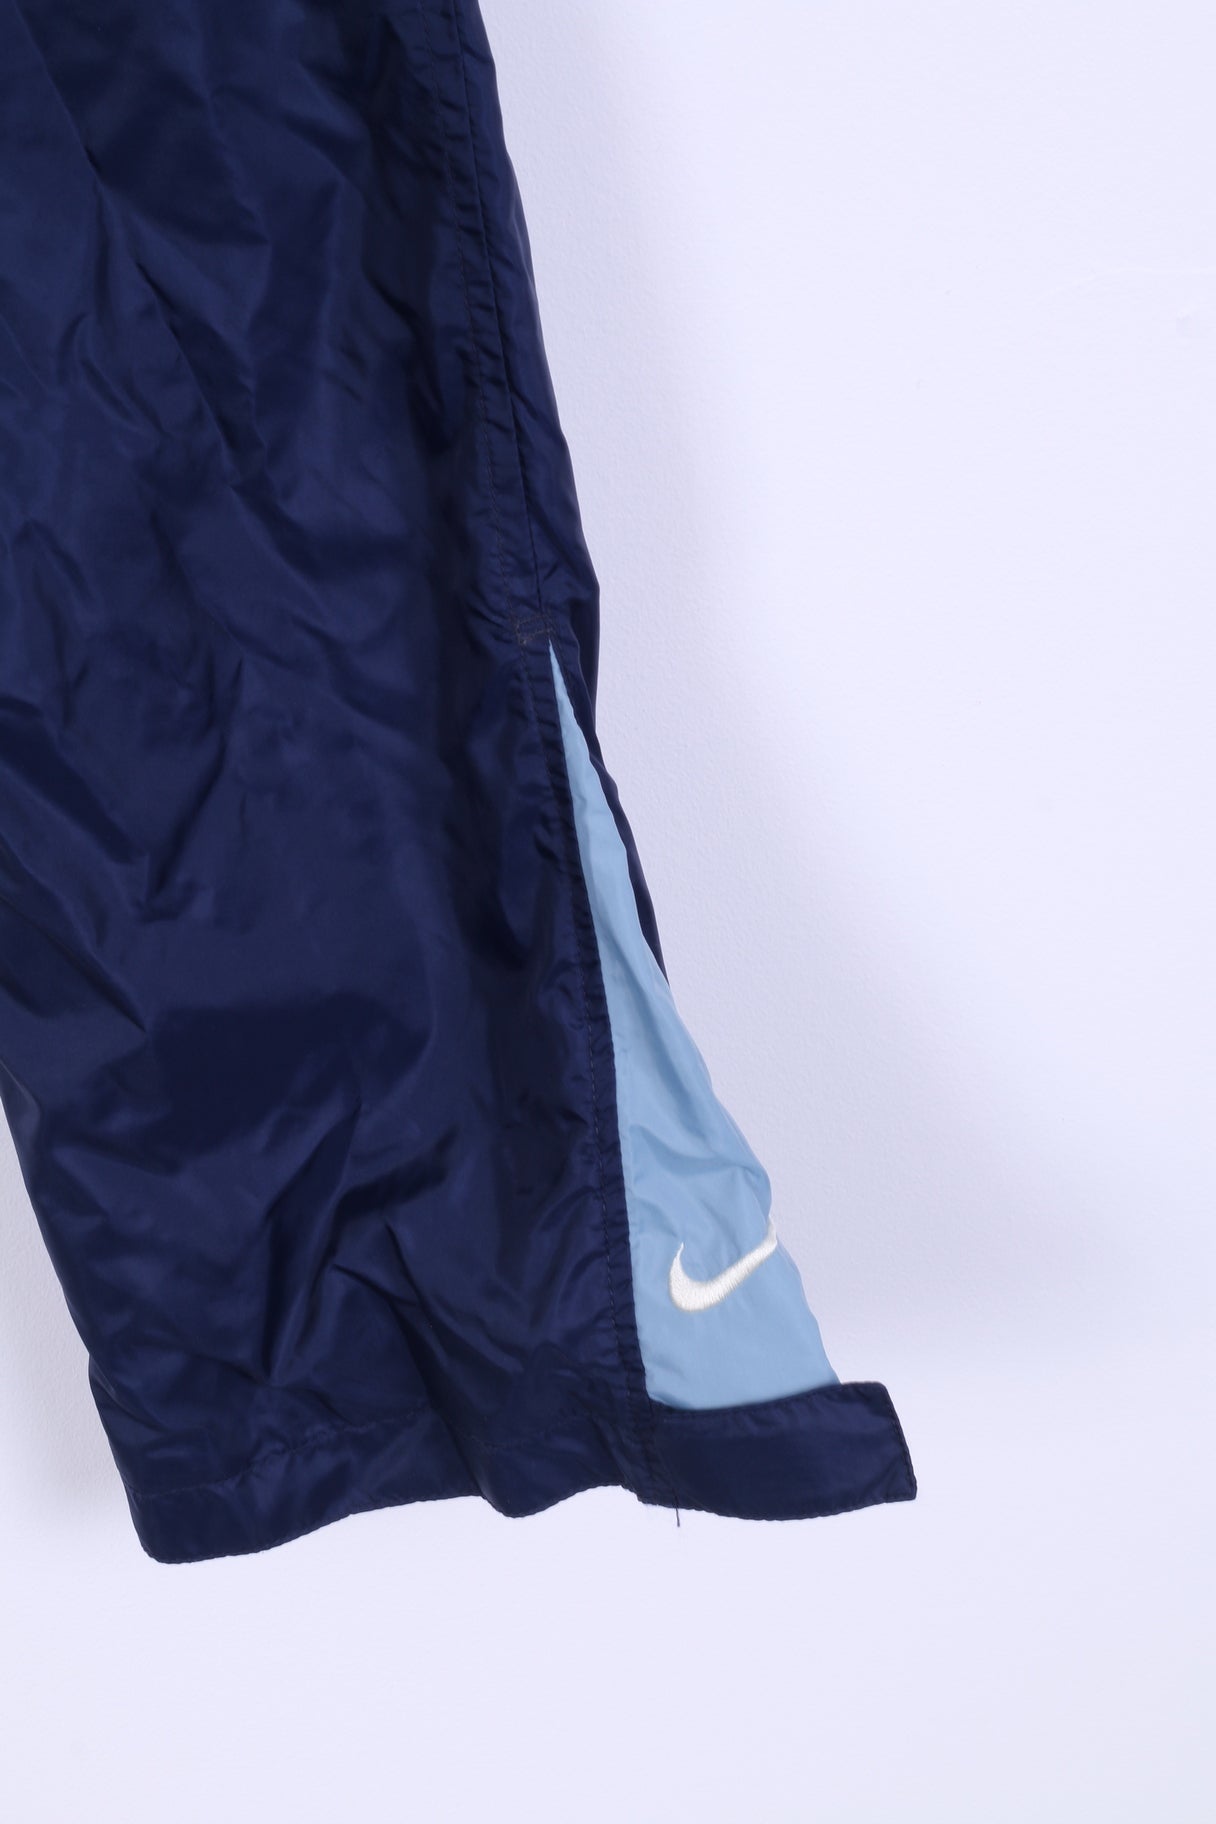 Nike Garçons L 152- 158 Pantalon Bas Survêtement Marine Pantalon Sport